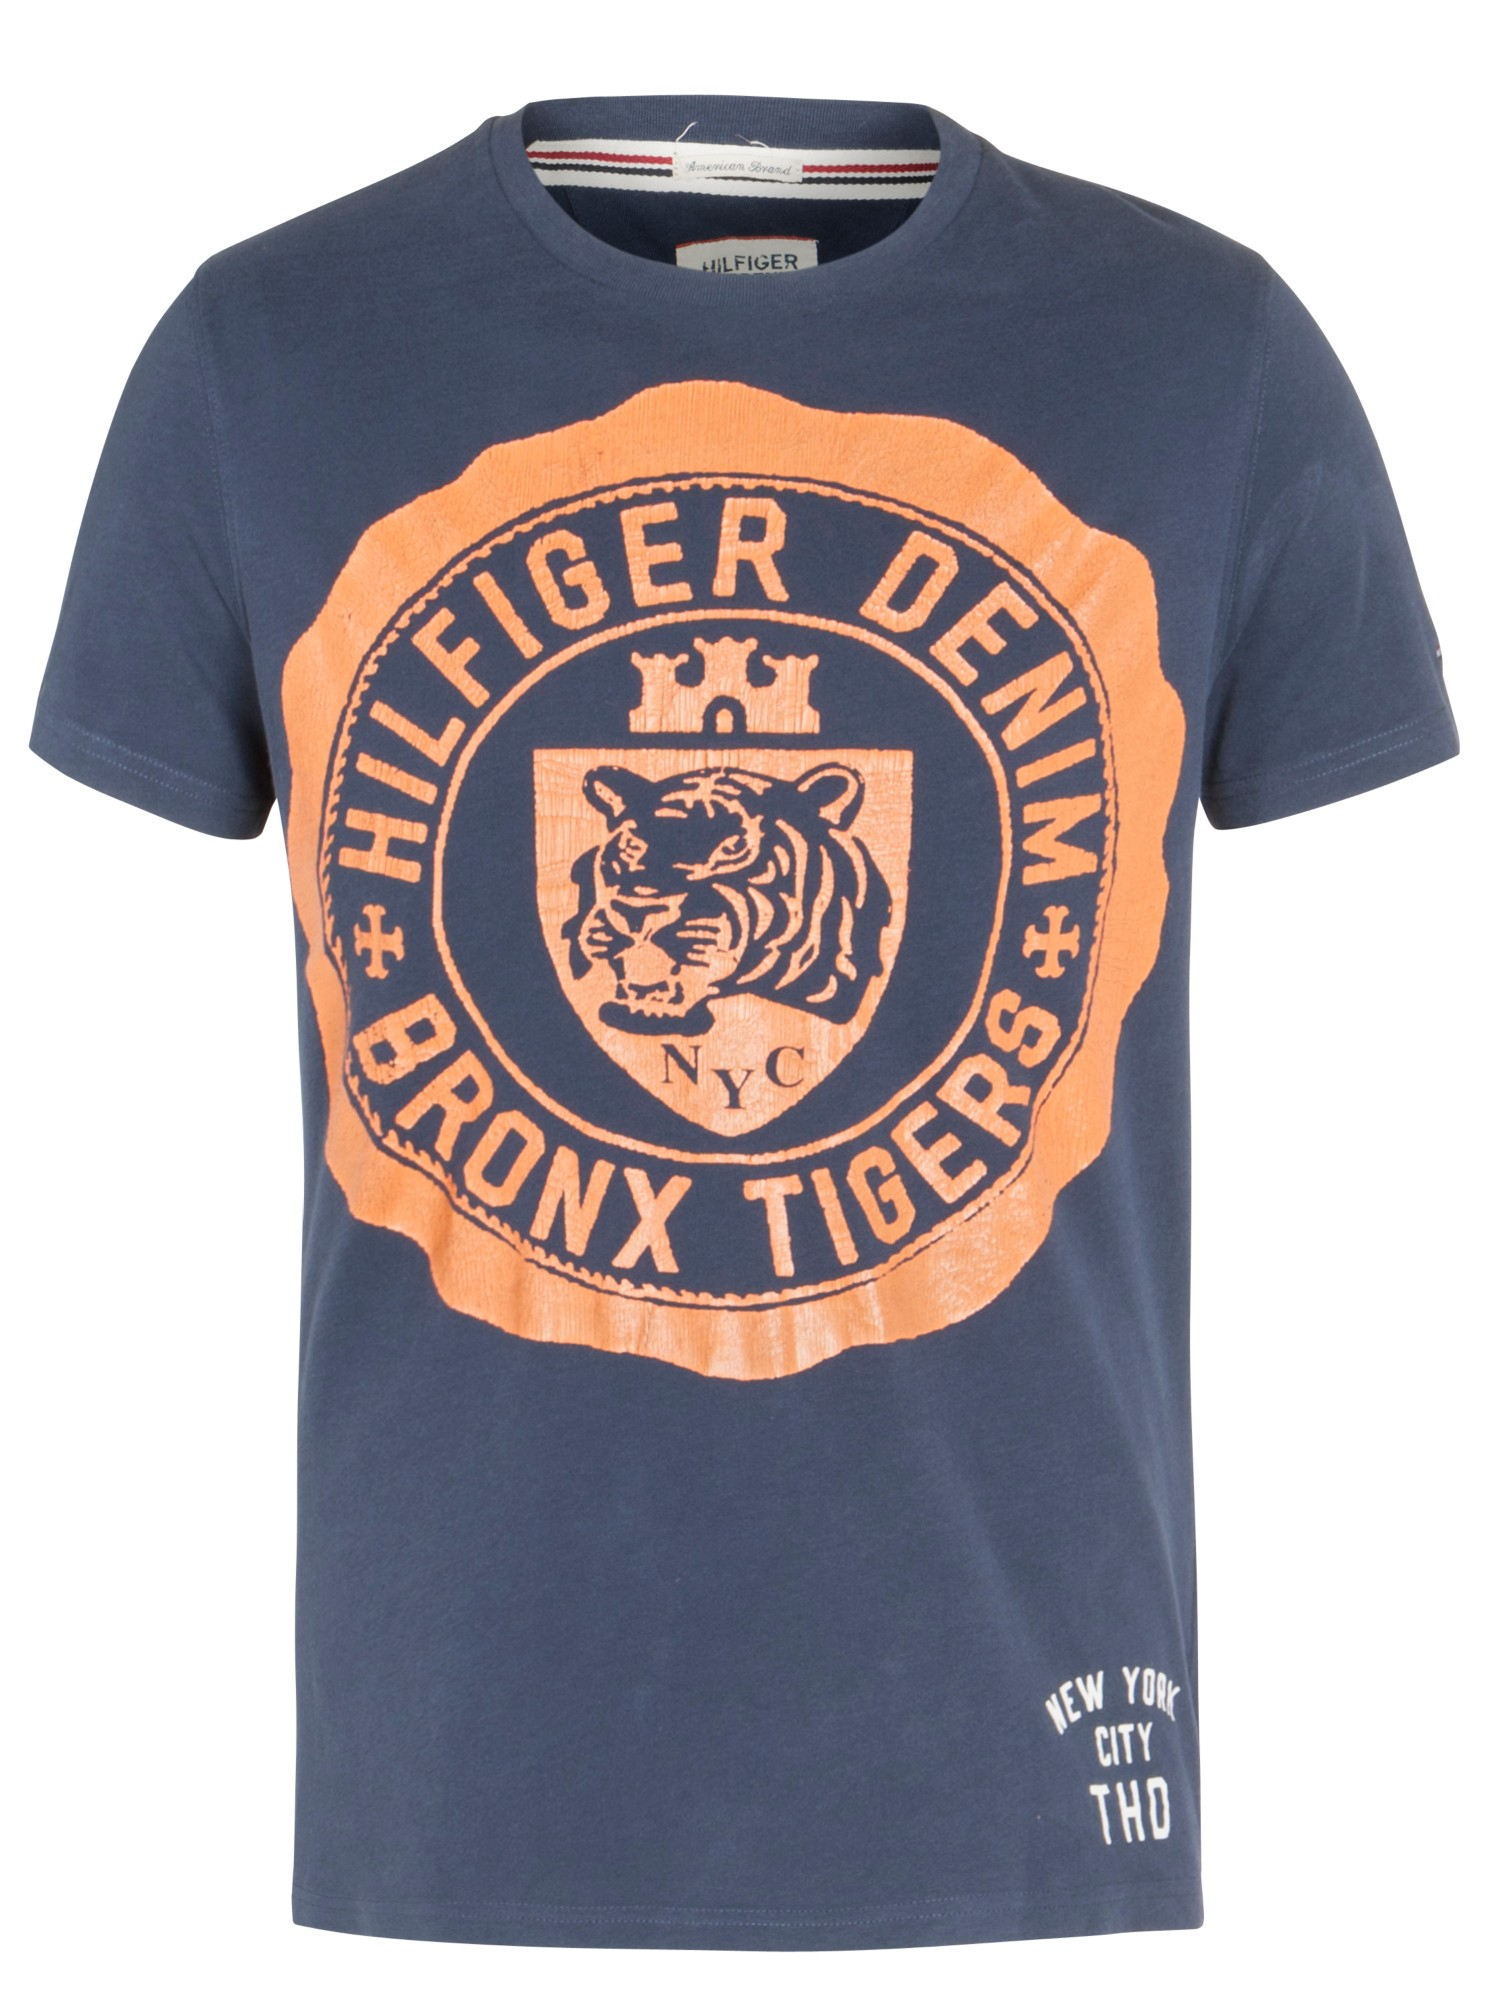 Hilfiger Denim Tommy Hilfiger Bronx Tigers Logo Tshirt in Black (Blue) for  Men - Lyst